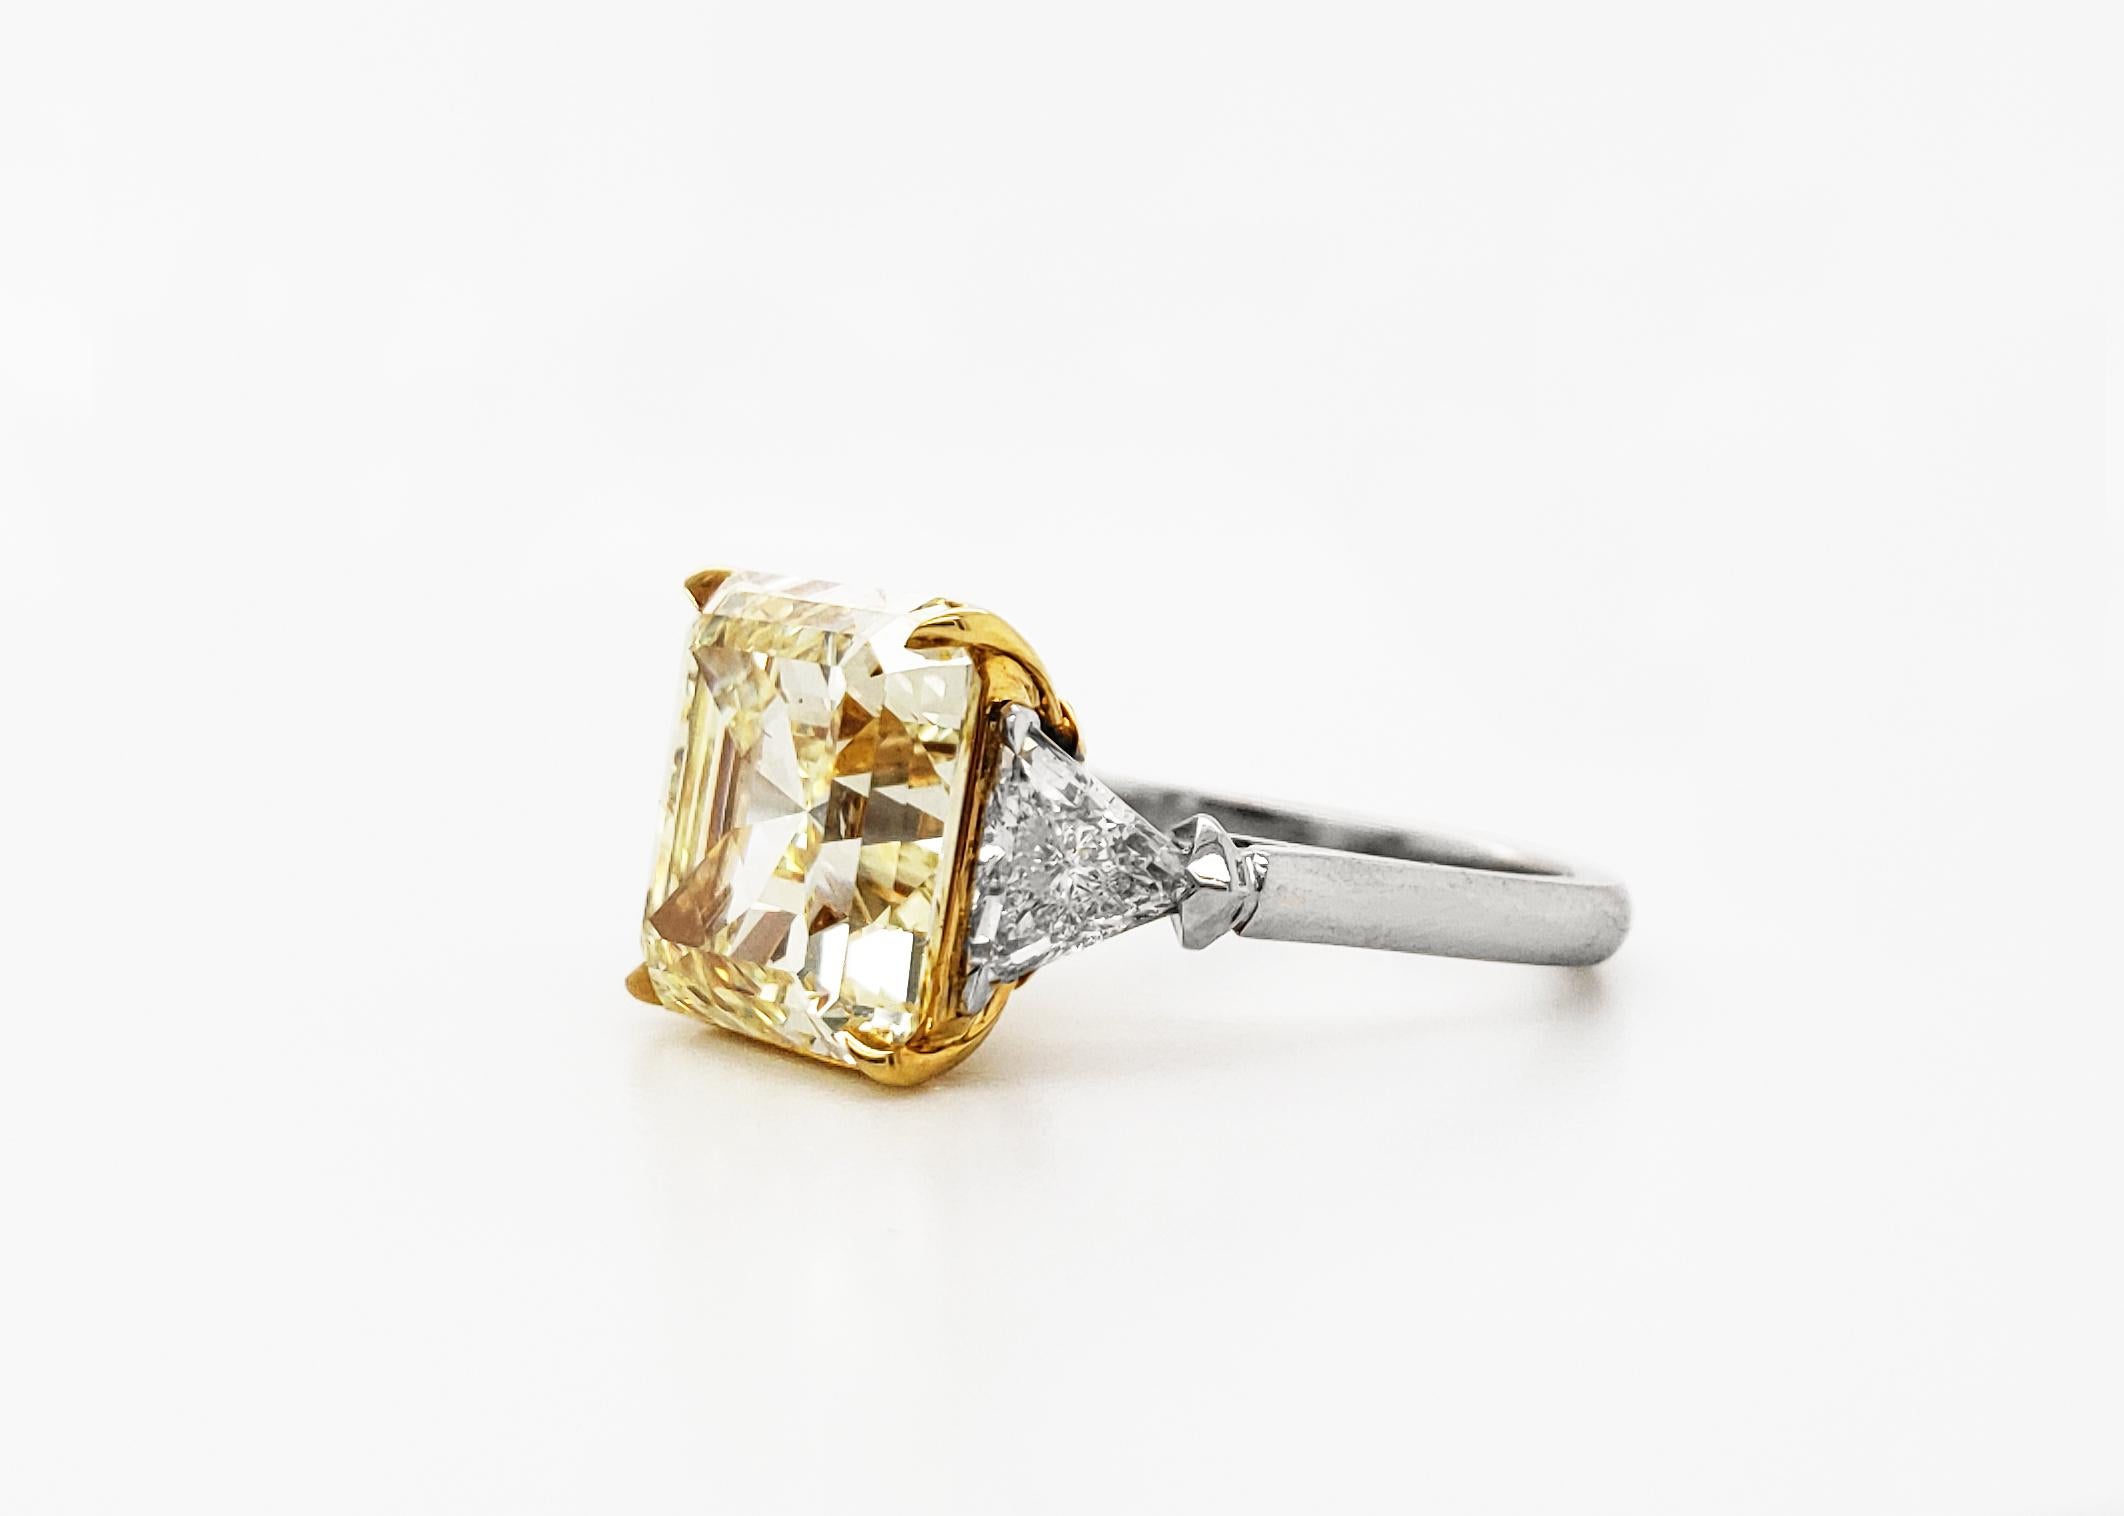 Women's Scarselli 7 Carat Fancy Yellow Diamond Ring in Platinum